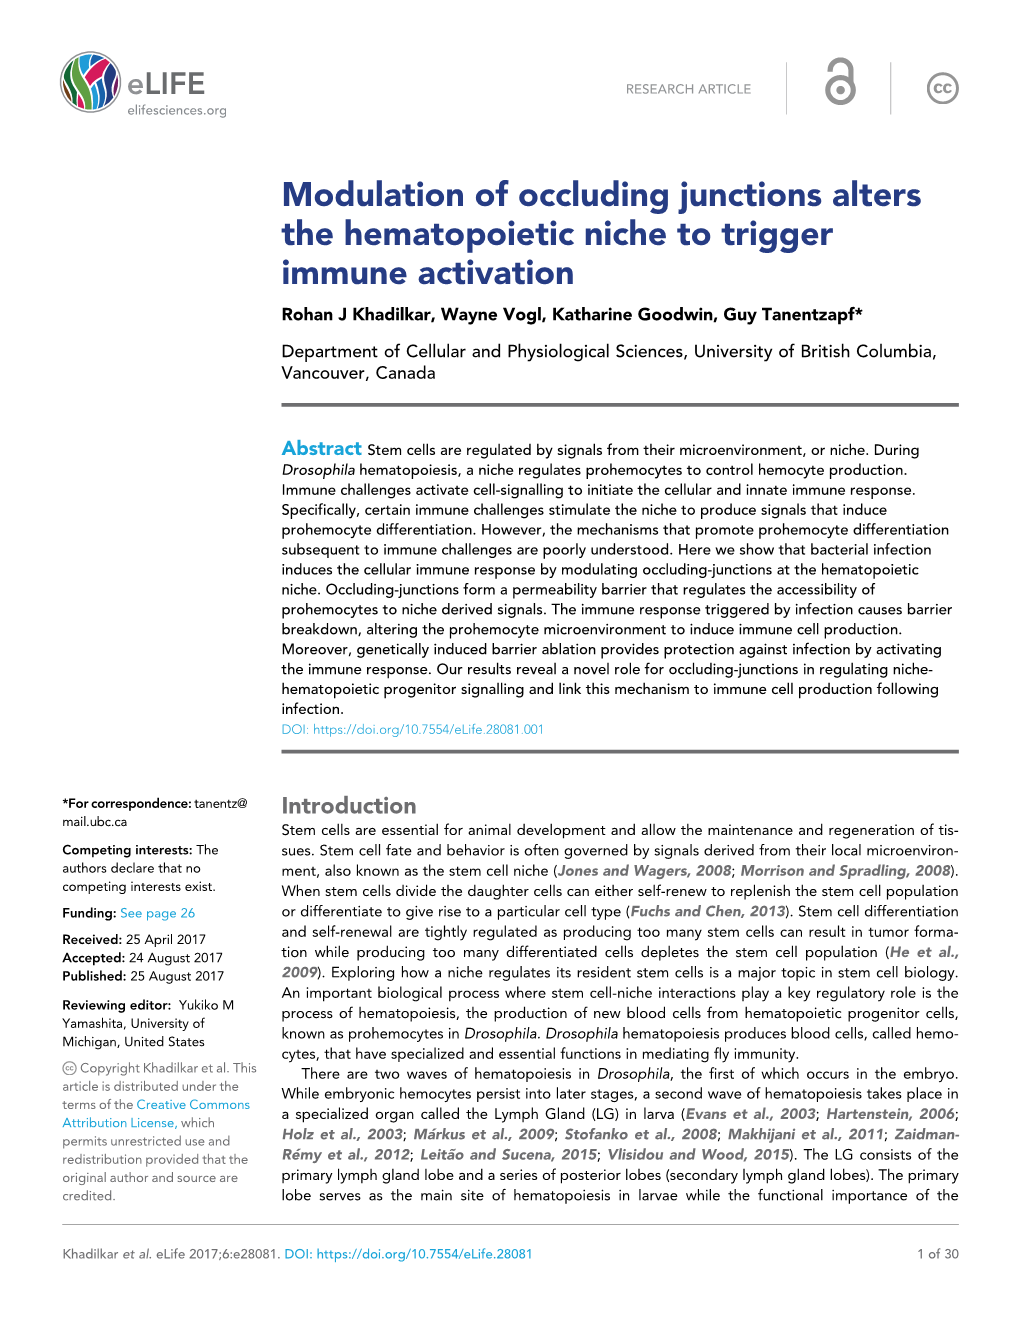 Modulation of Occluding Junctions Alters the Hematopoietic Niche to Trigger Immune Activation Rohan J Khadilkar, Wayne Vogl, Katharine Goodwin, Guy Tanentzapf*